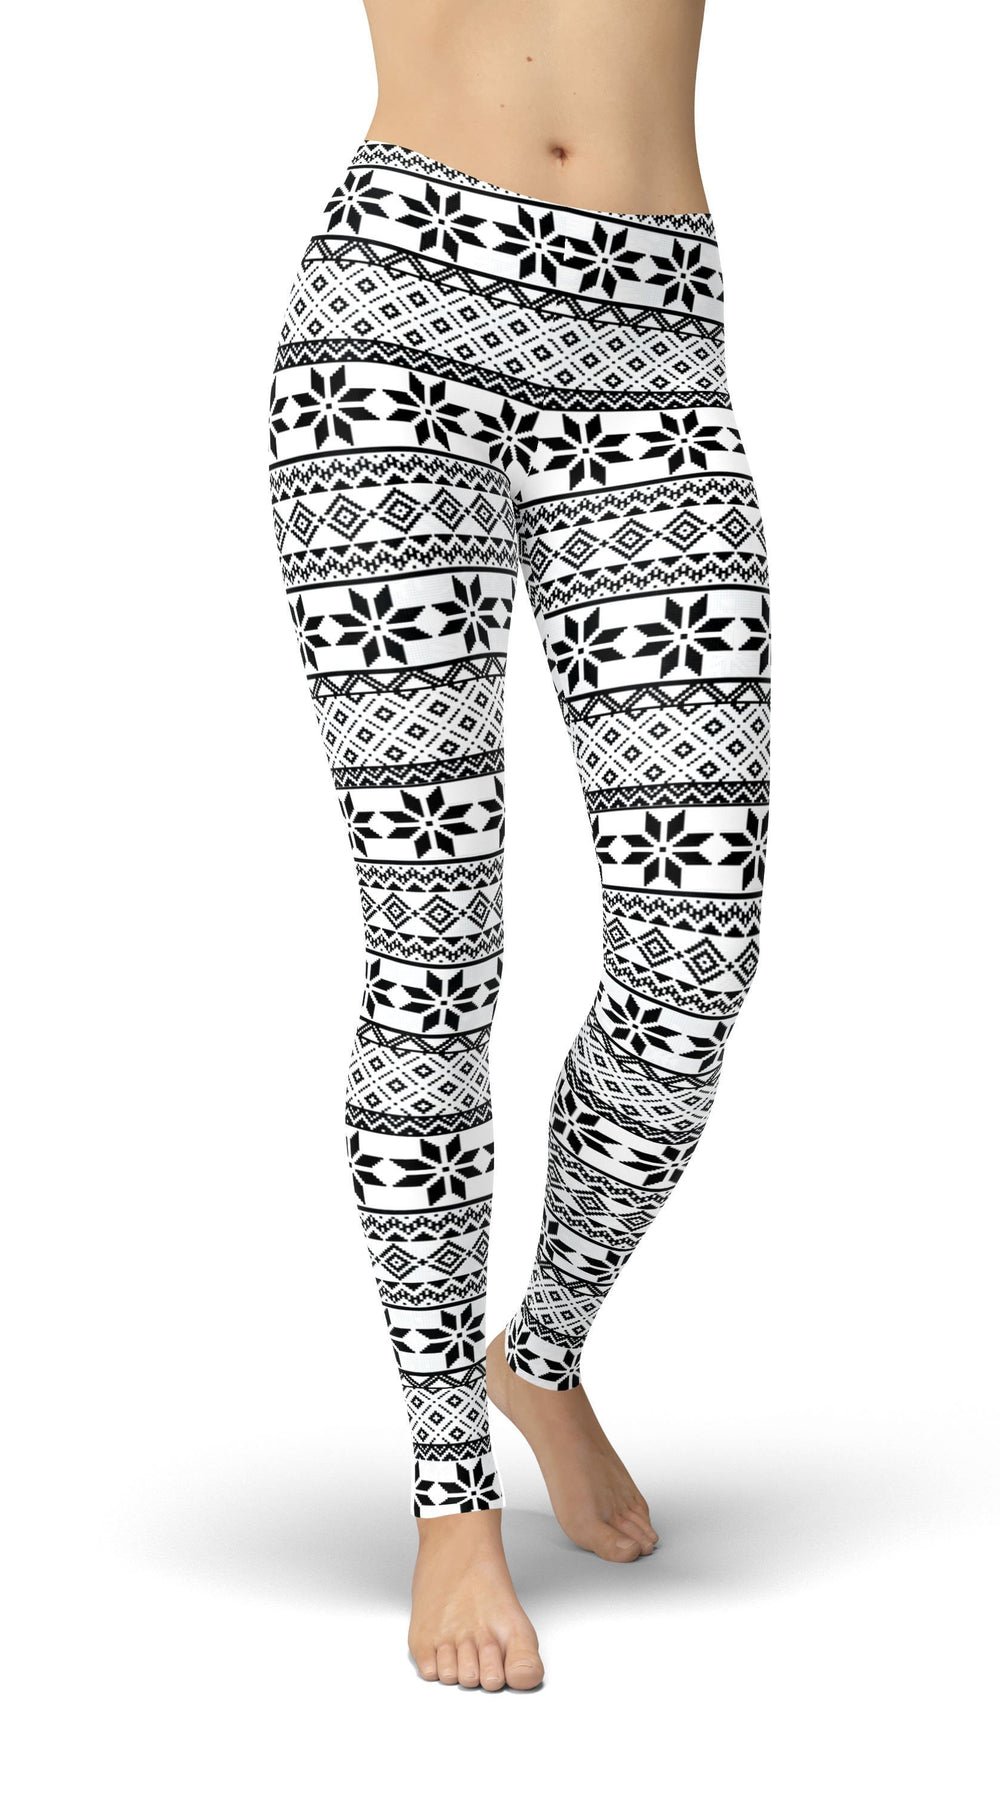 jean black and white snowflakes leggings